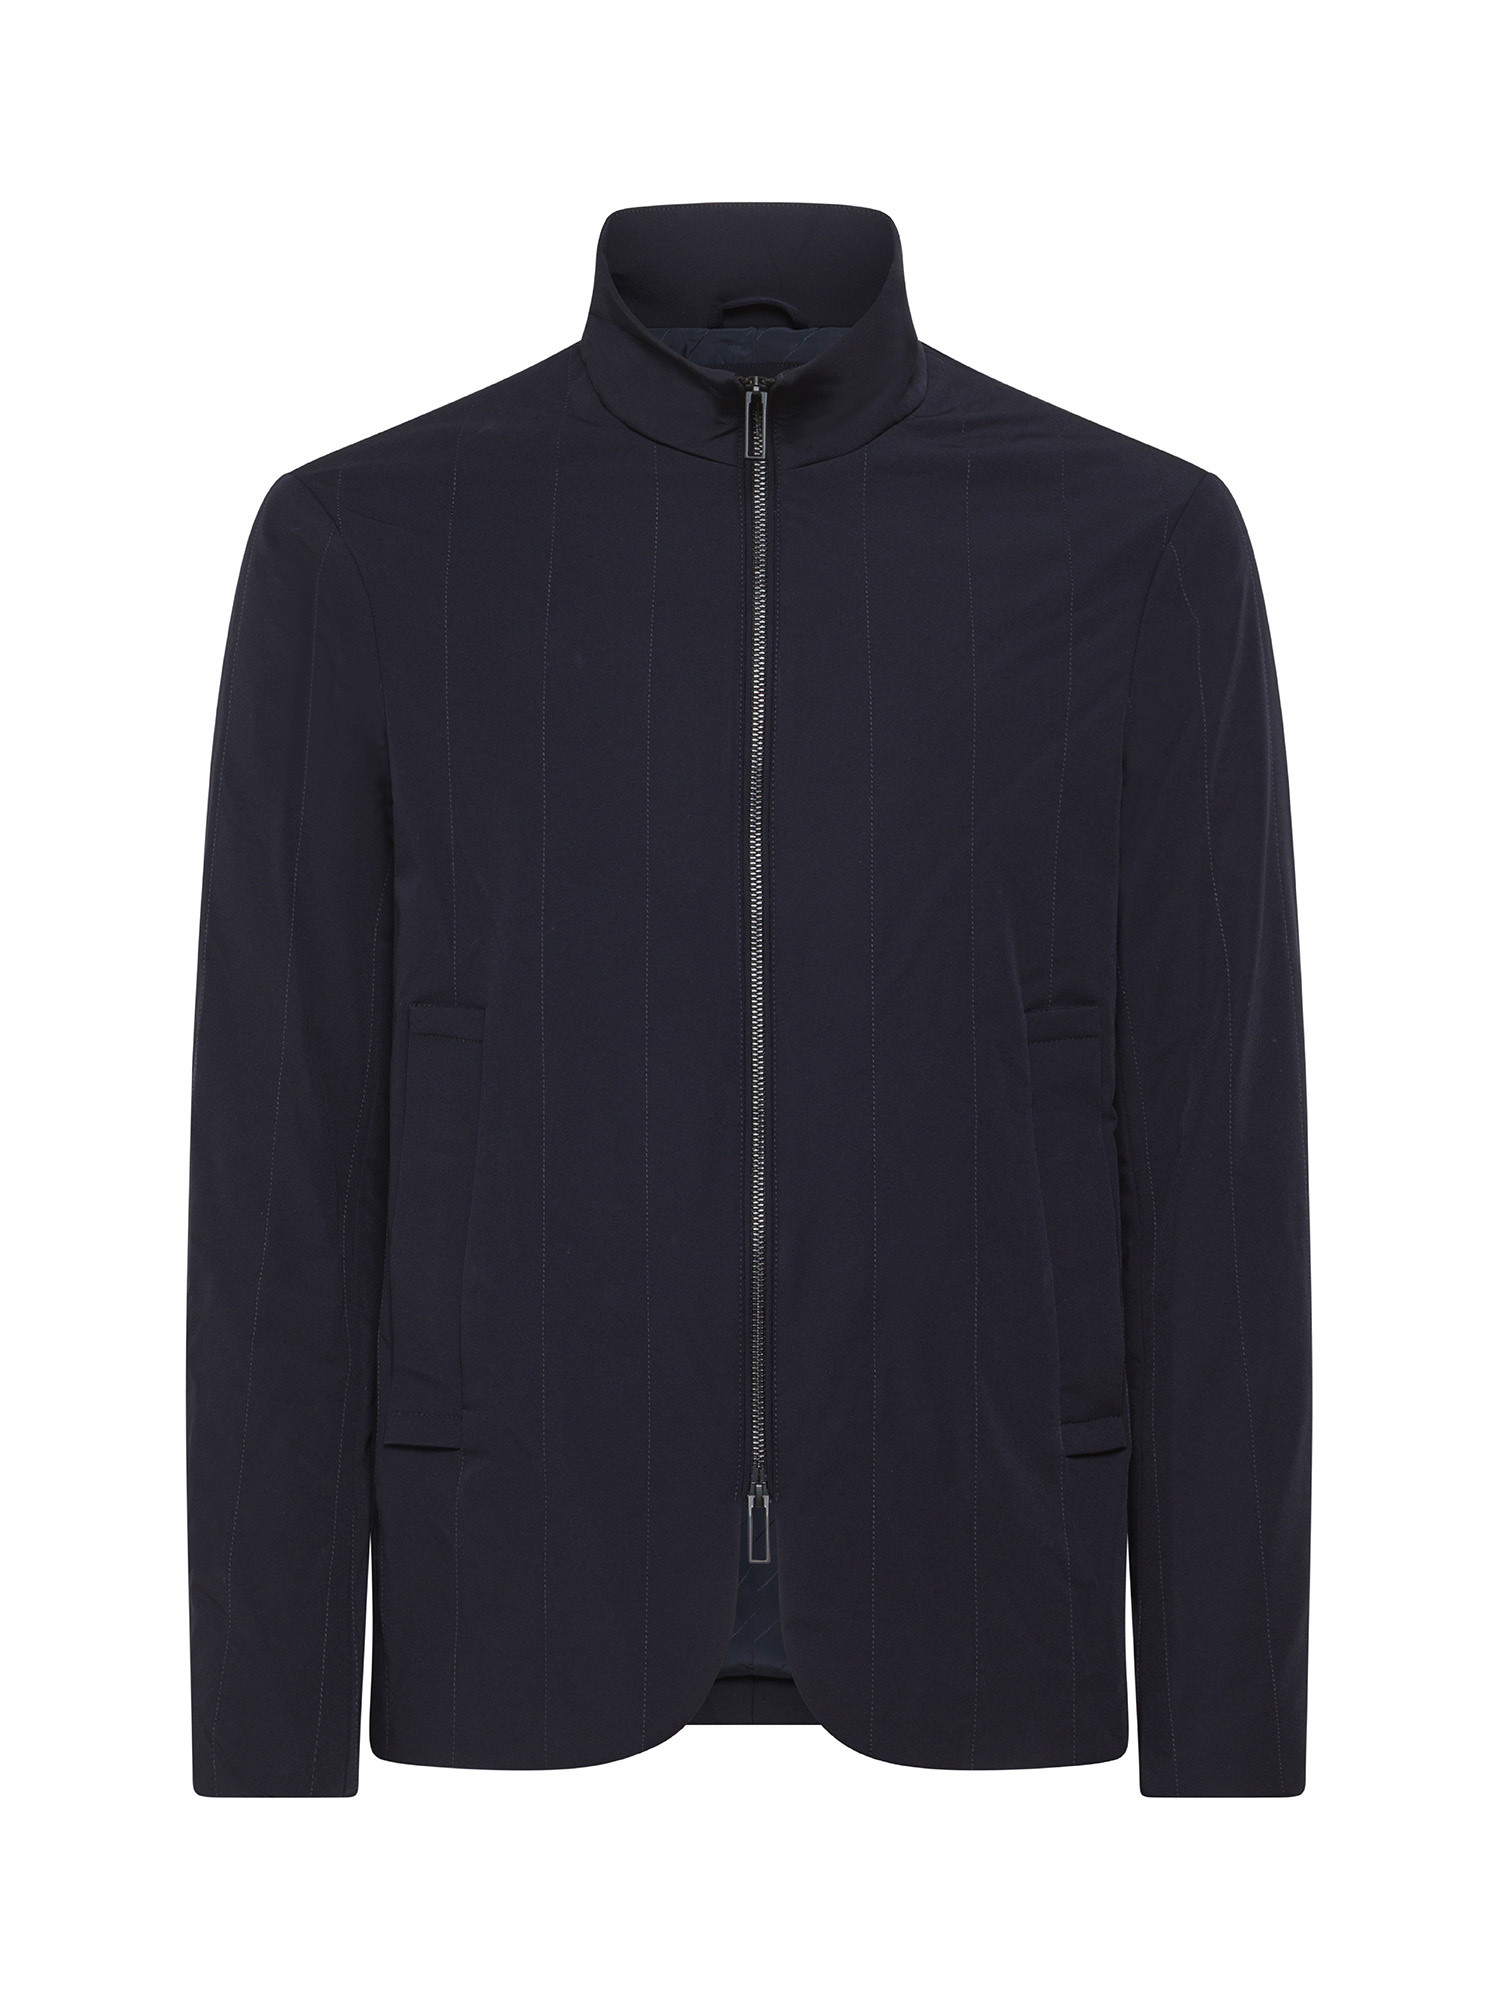 Emporio Armani - Pinstripe full zip jacket, Dark Blue, large image number 0